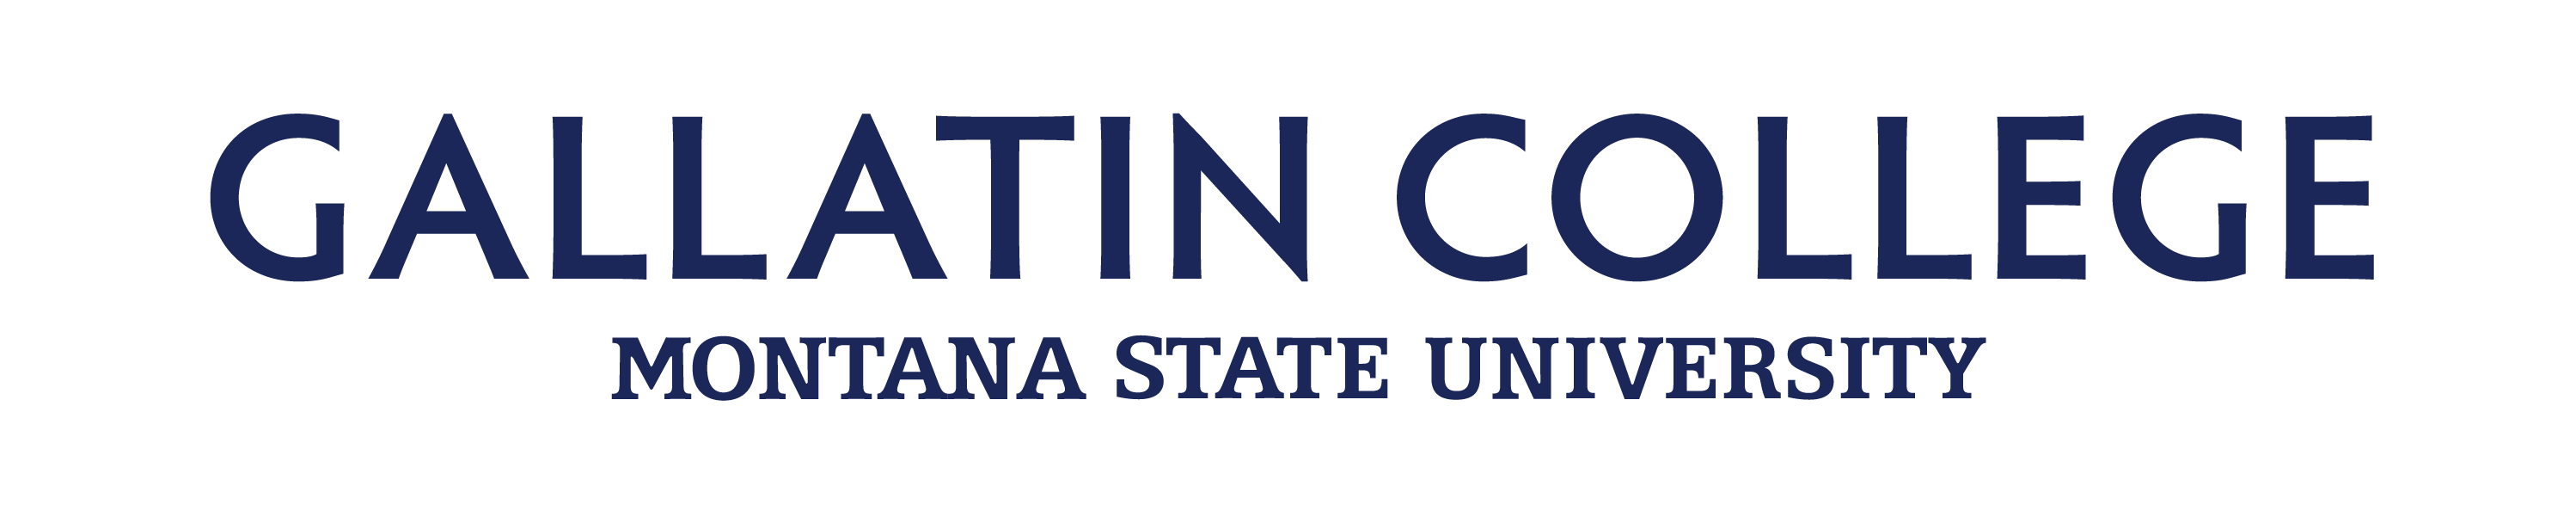 gallatin college logo